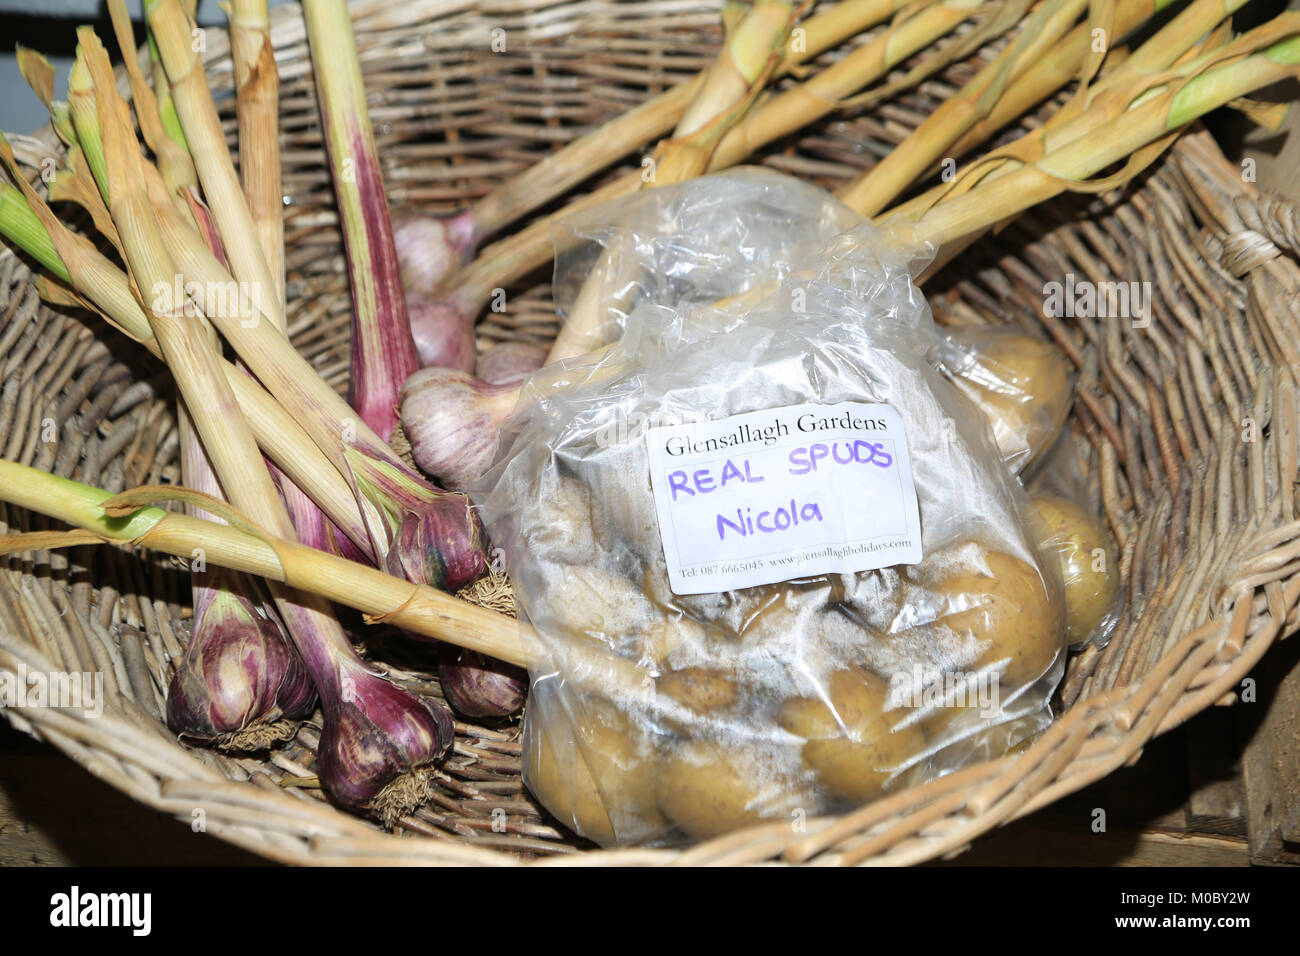 Bags Onion Potato Farmers Market Stock Photo 505053250